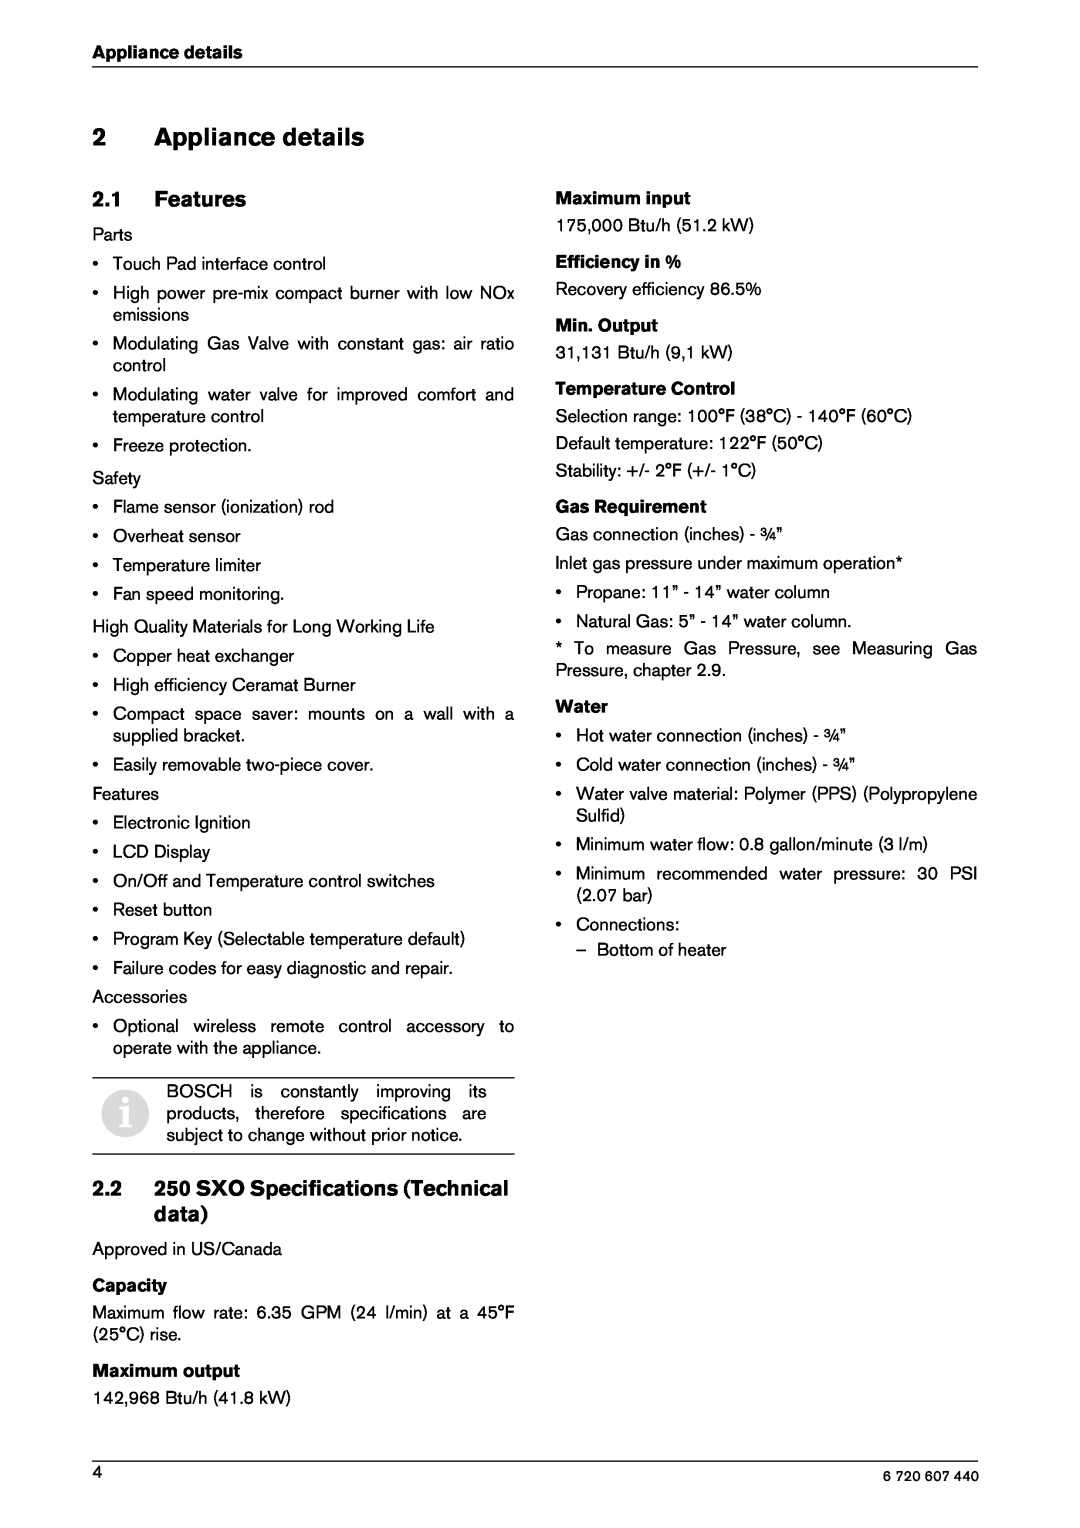 Bosch Appliances 250 SXO NG, 250 SXO LP manual Appliance details, Features, 2.2 250 SXO Specifications Technical data 